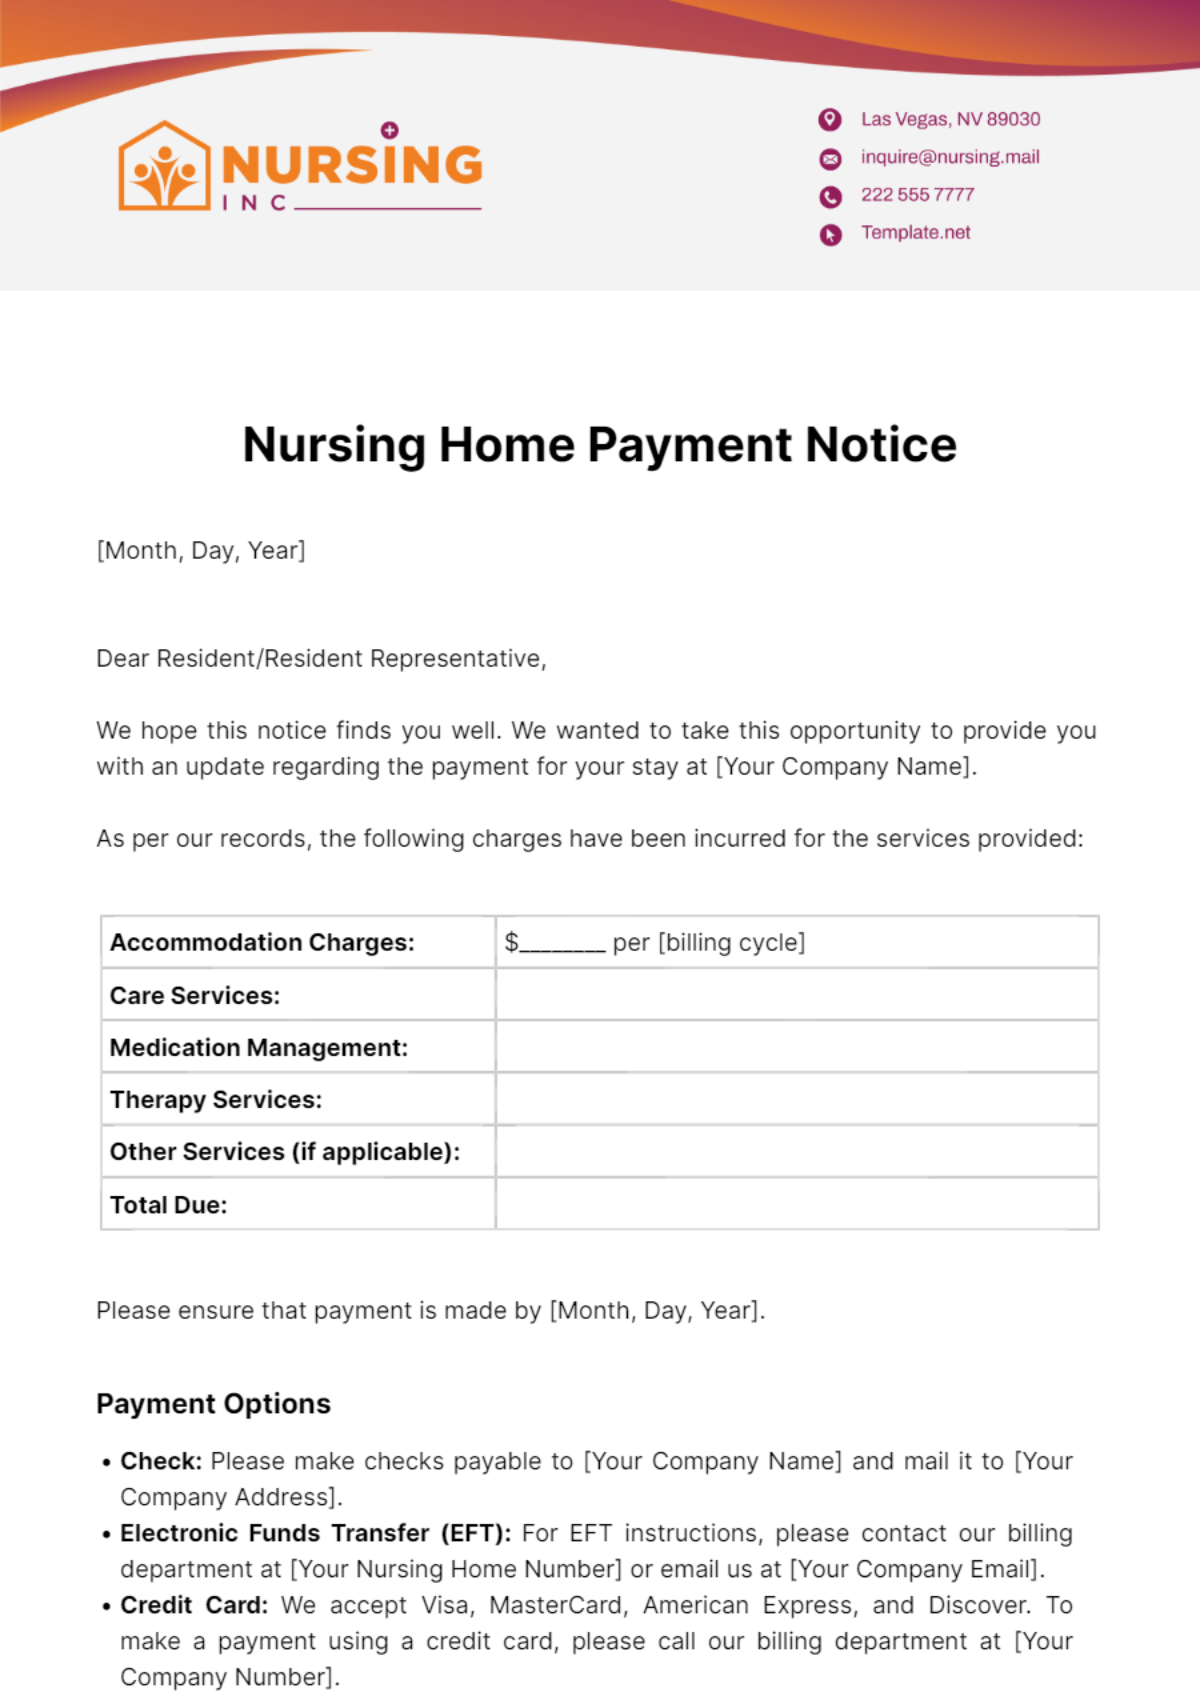 Nursing Home Payment Notice Template